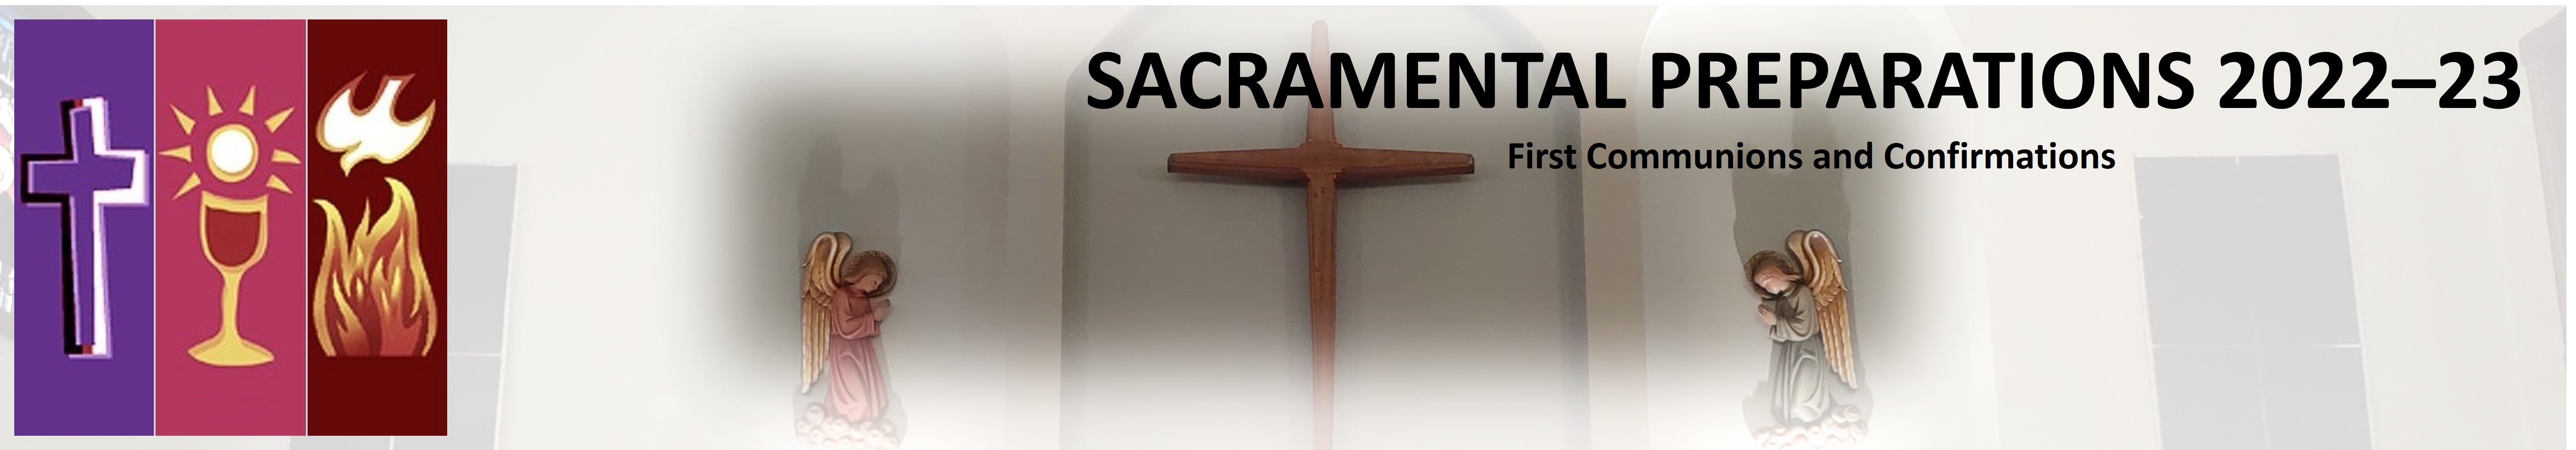 Header - Sacramental Preparations 2022-23